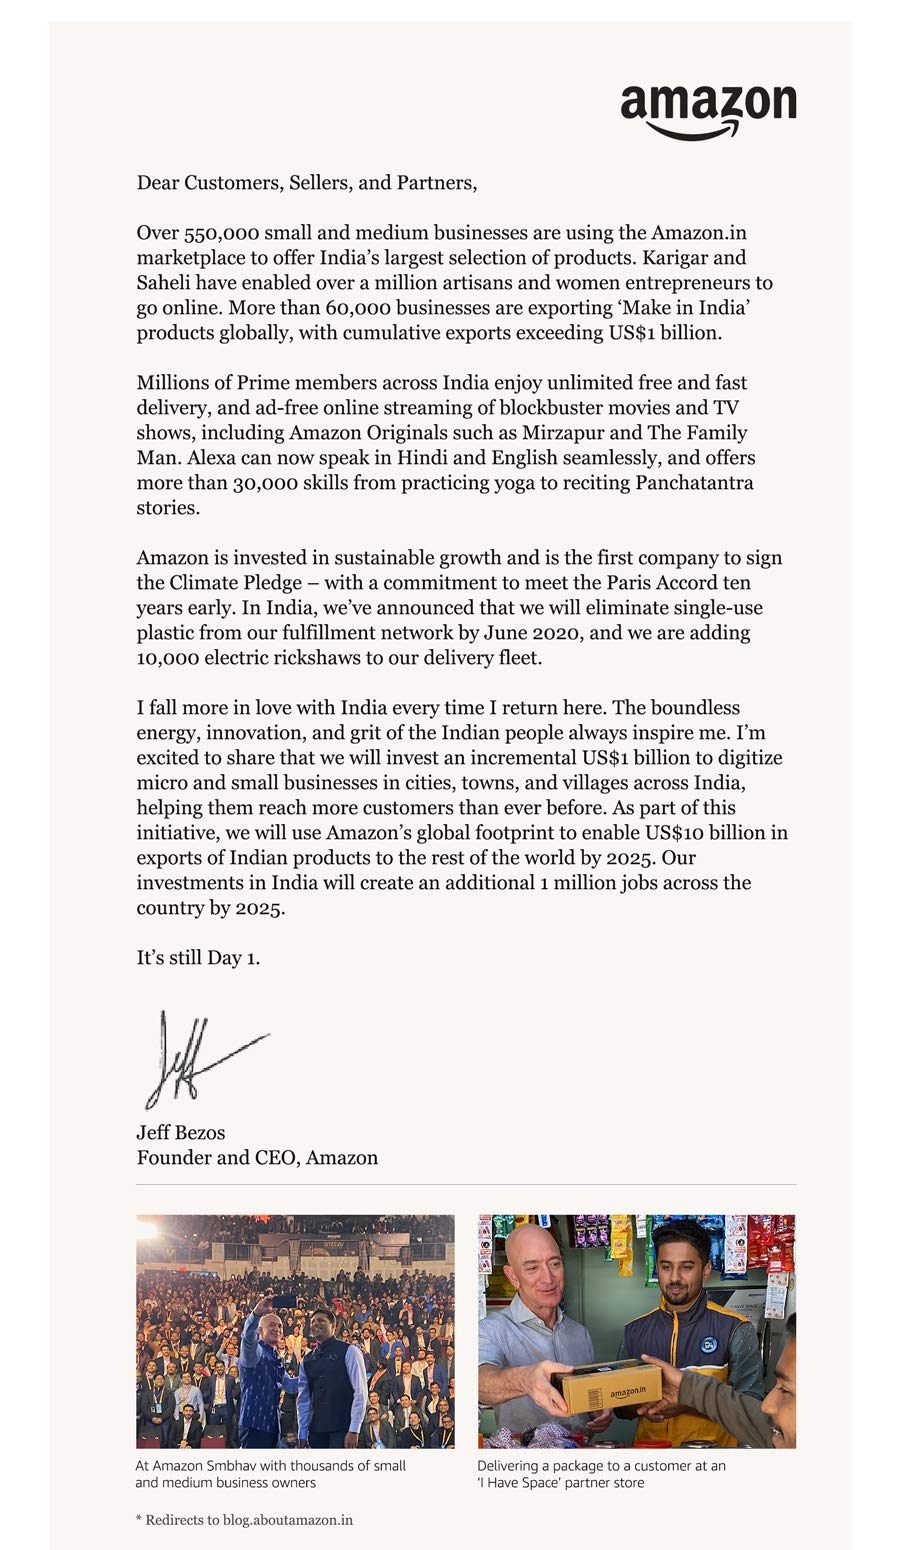 Jeff Bezos'letter